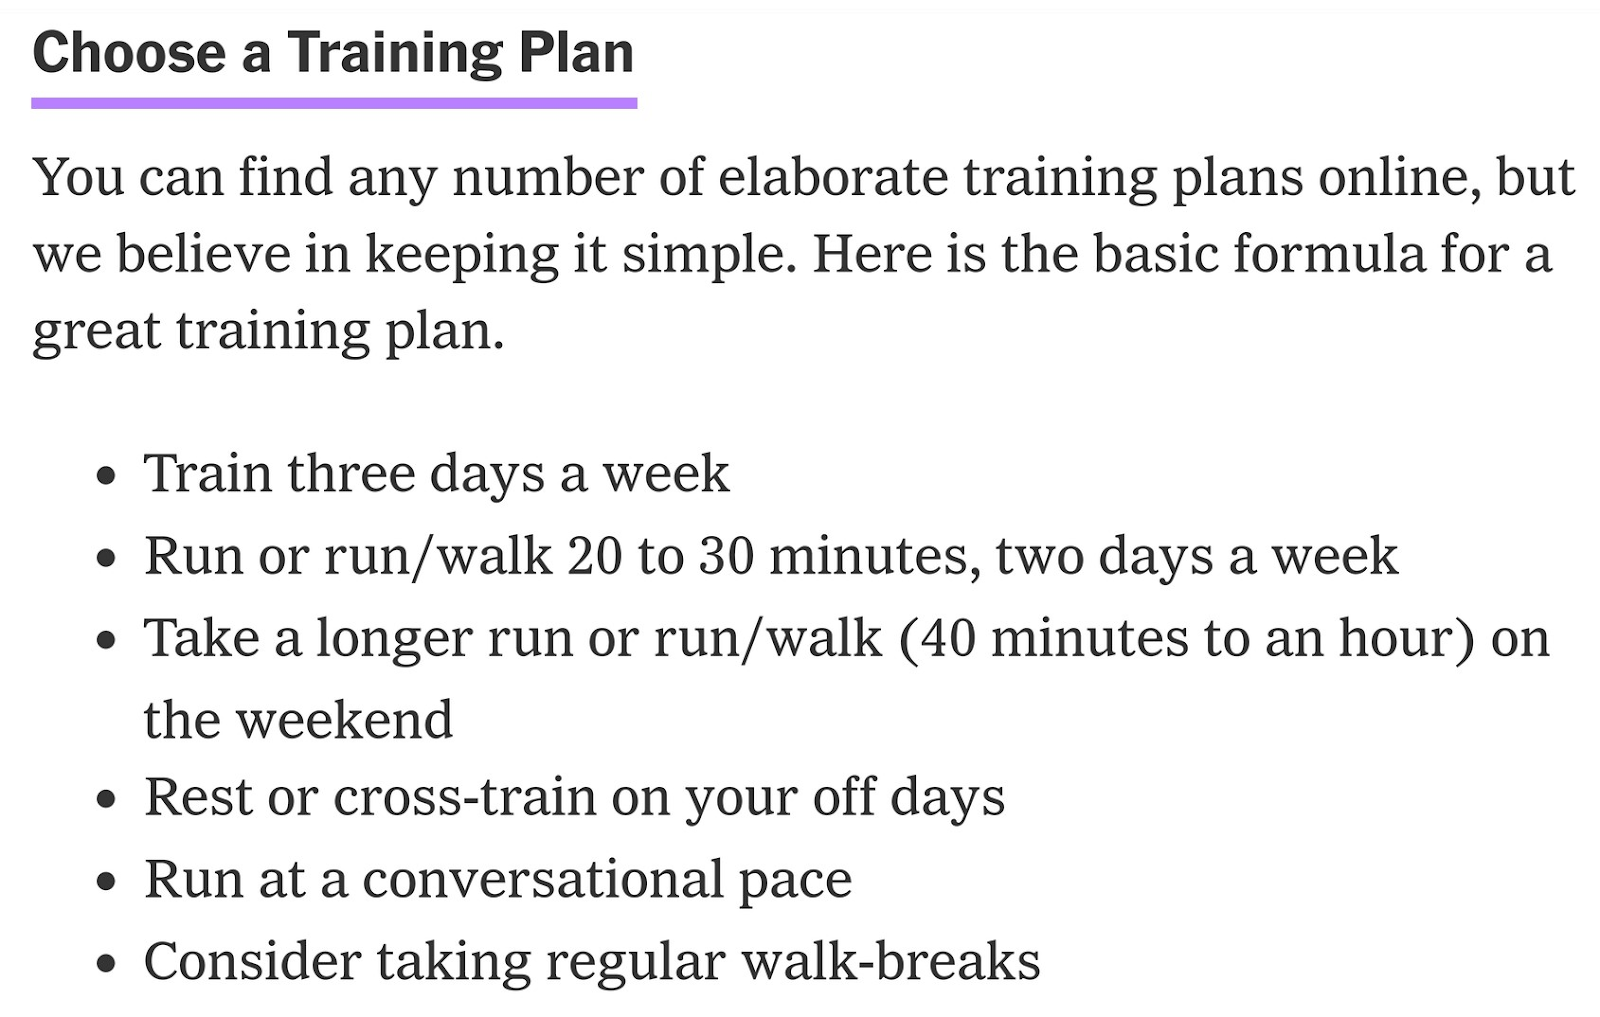 “Choose a Training Plan” subheading